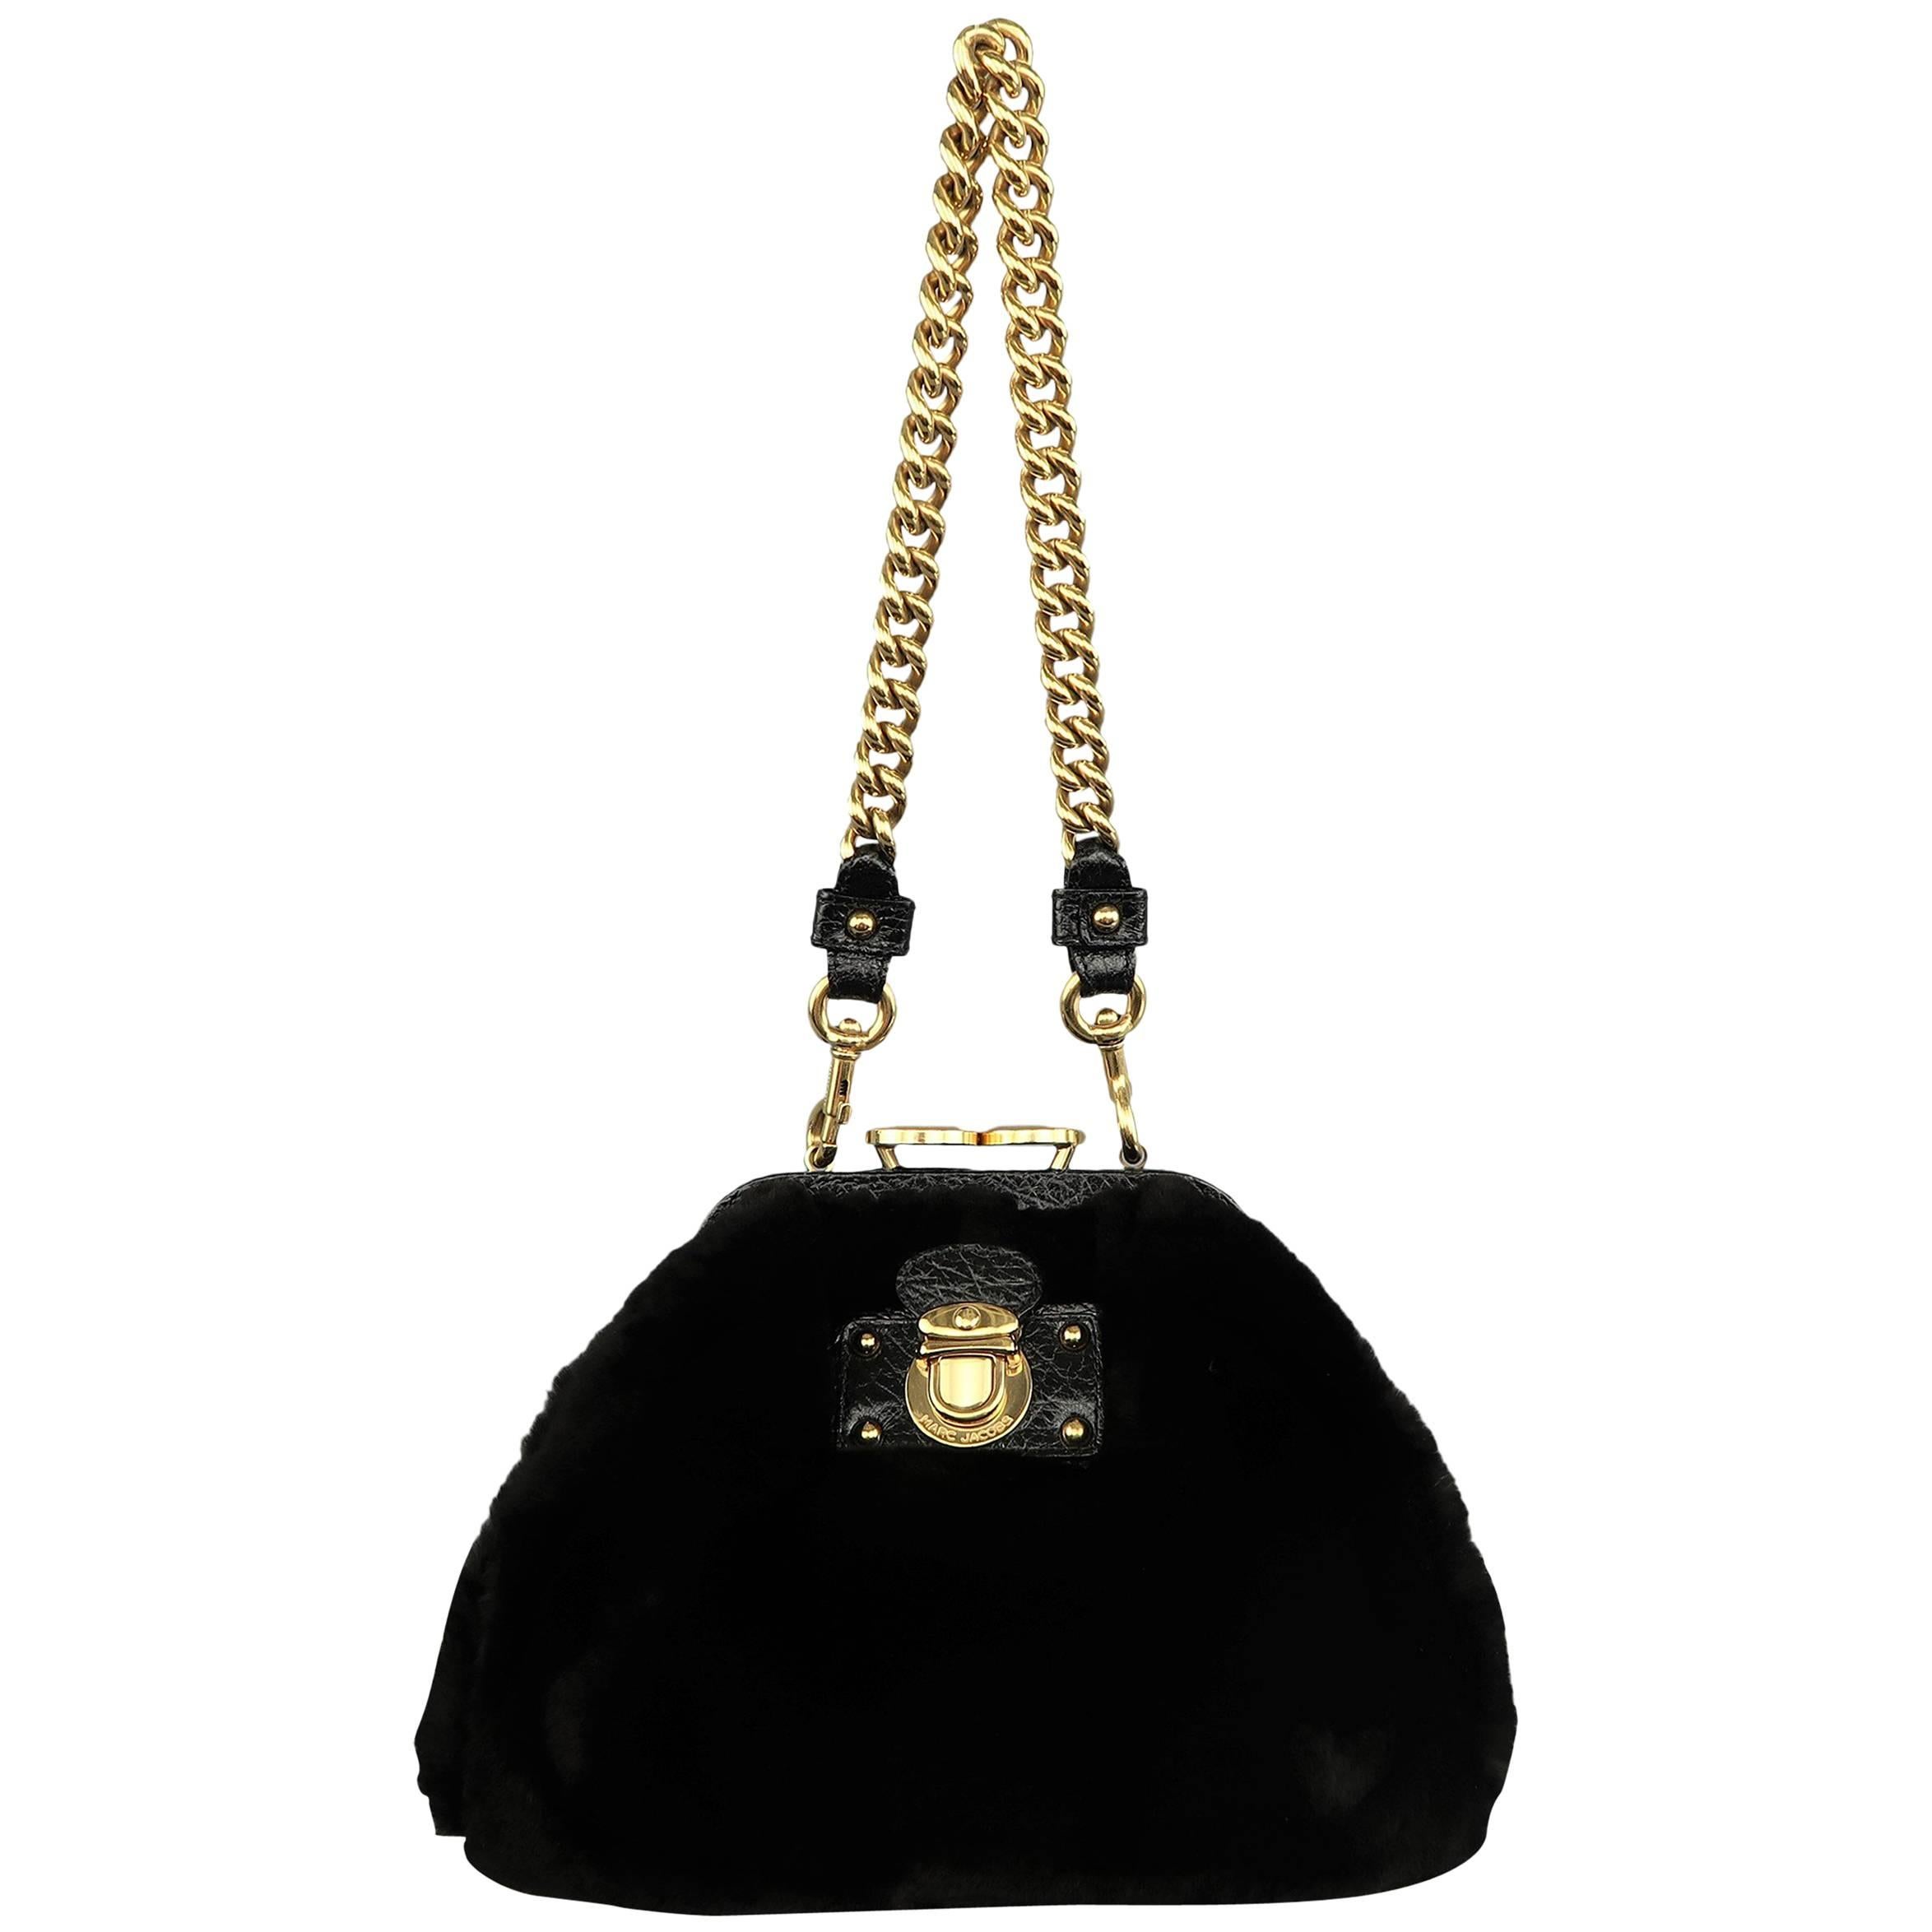 Marc Jacobs Black Mink Fur Gold Kiss Lock Chain Purse Handbag